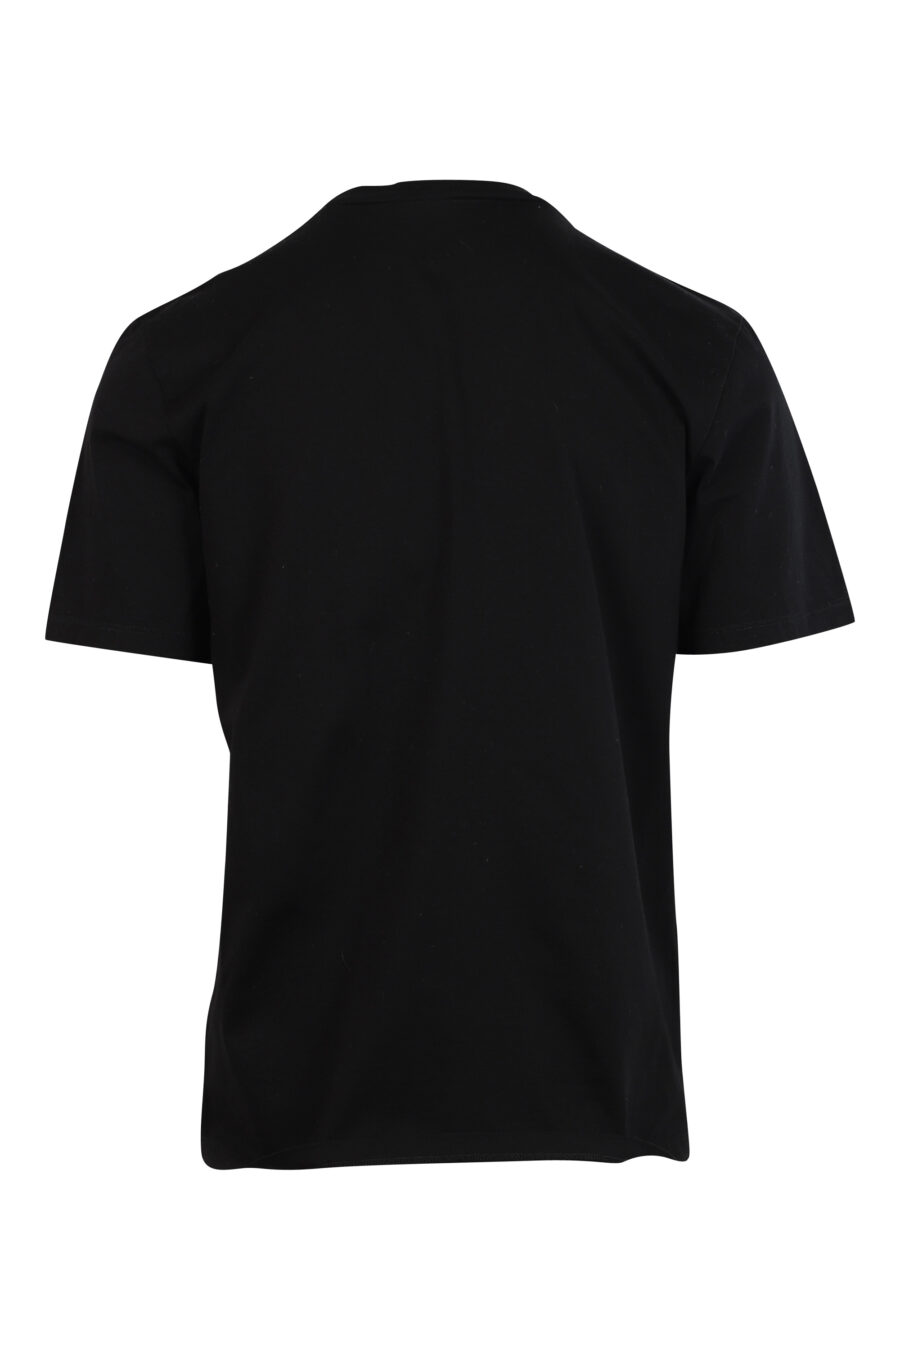 T-shirt noir avec maxilogo noir gaufré - 8052134990285 2